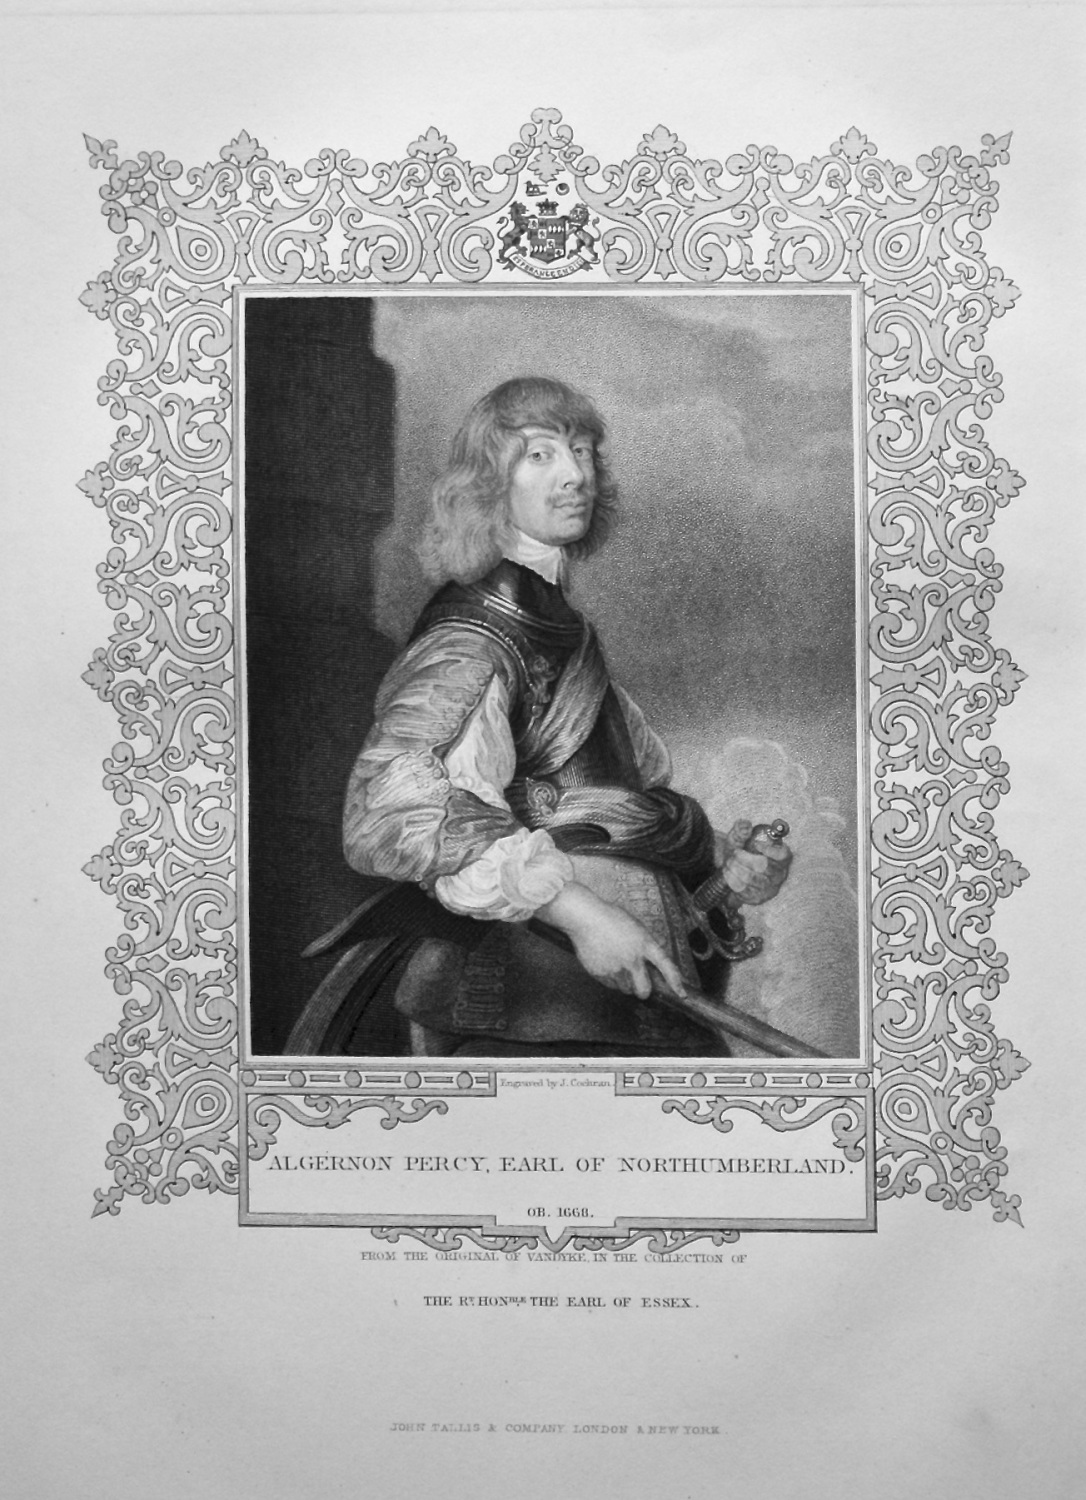 Algernon Percy, Earl of Northumberland.  OB. 1668.  From the original of Va